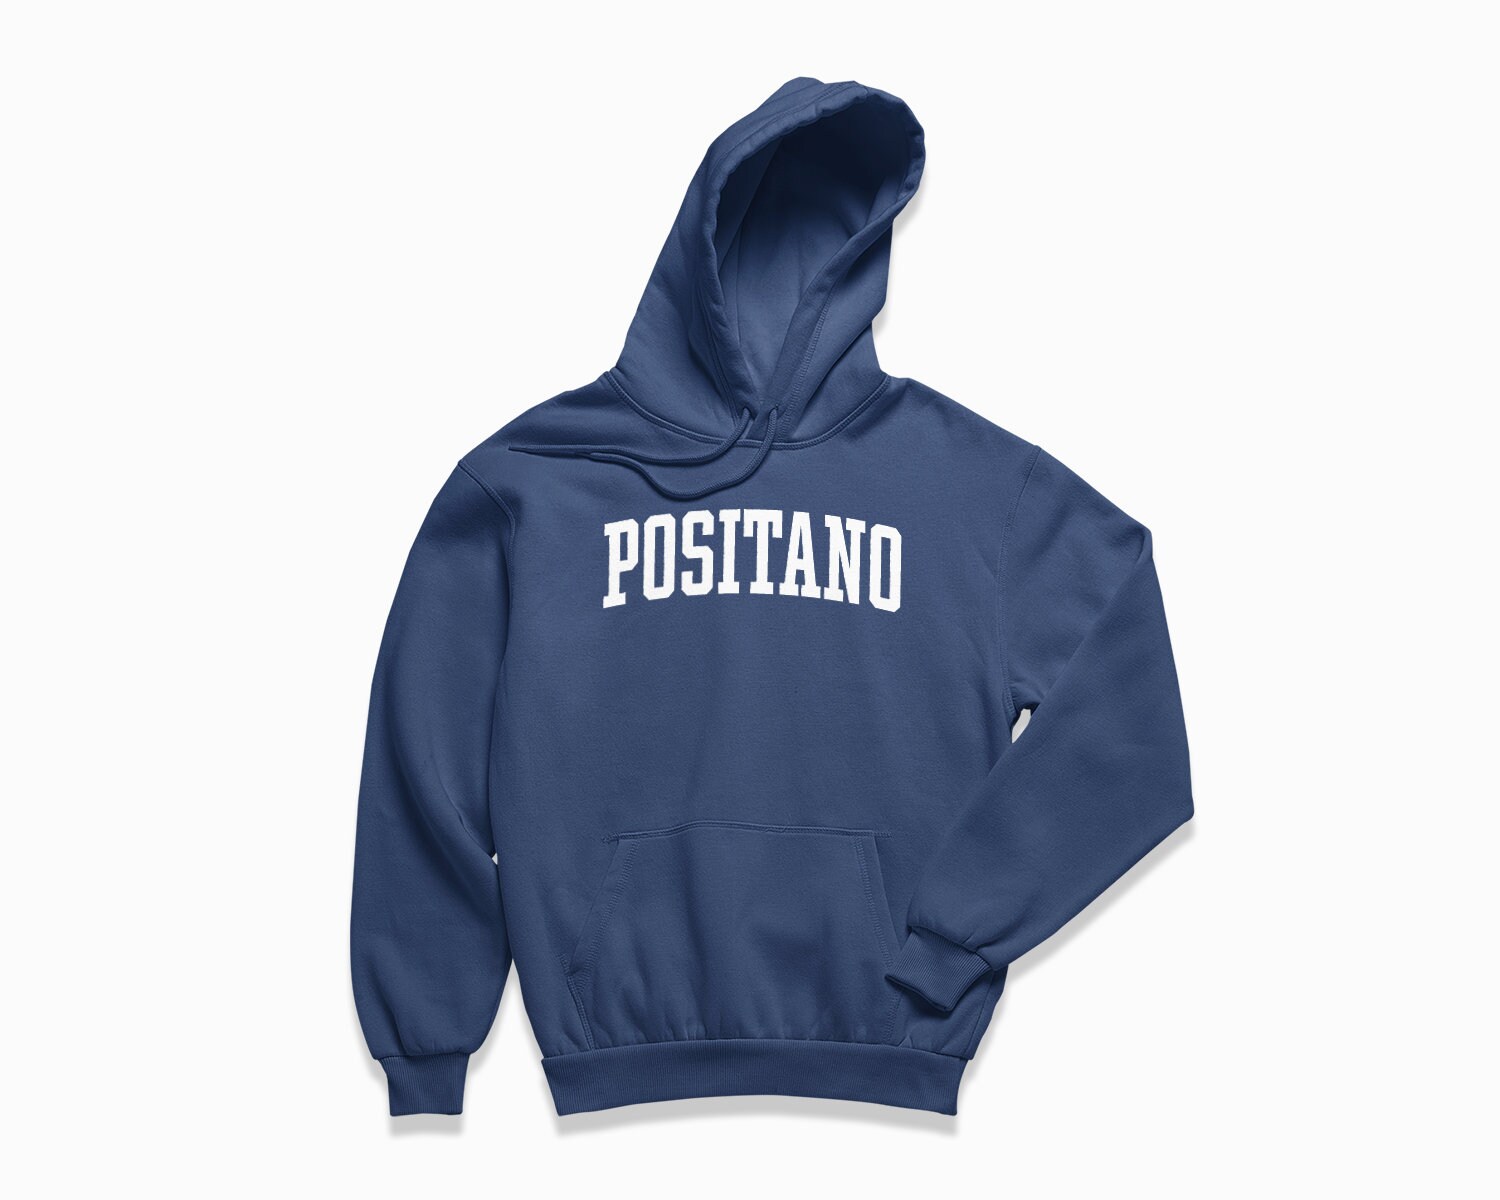 Positano Hoodie: Positano Italy Hooded Sweatshirt / College - Etsy